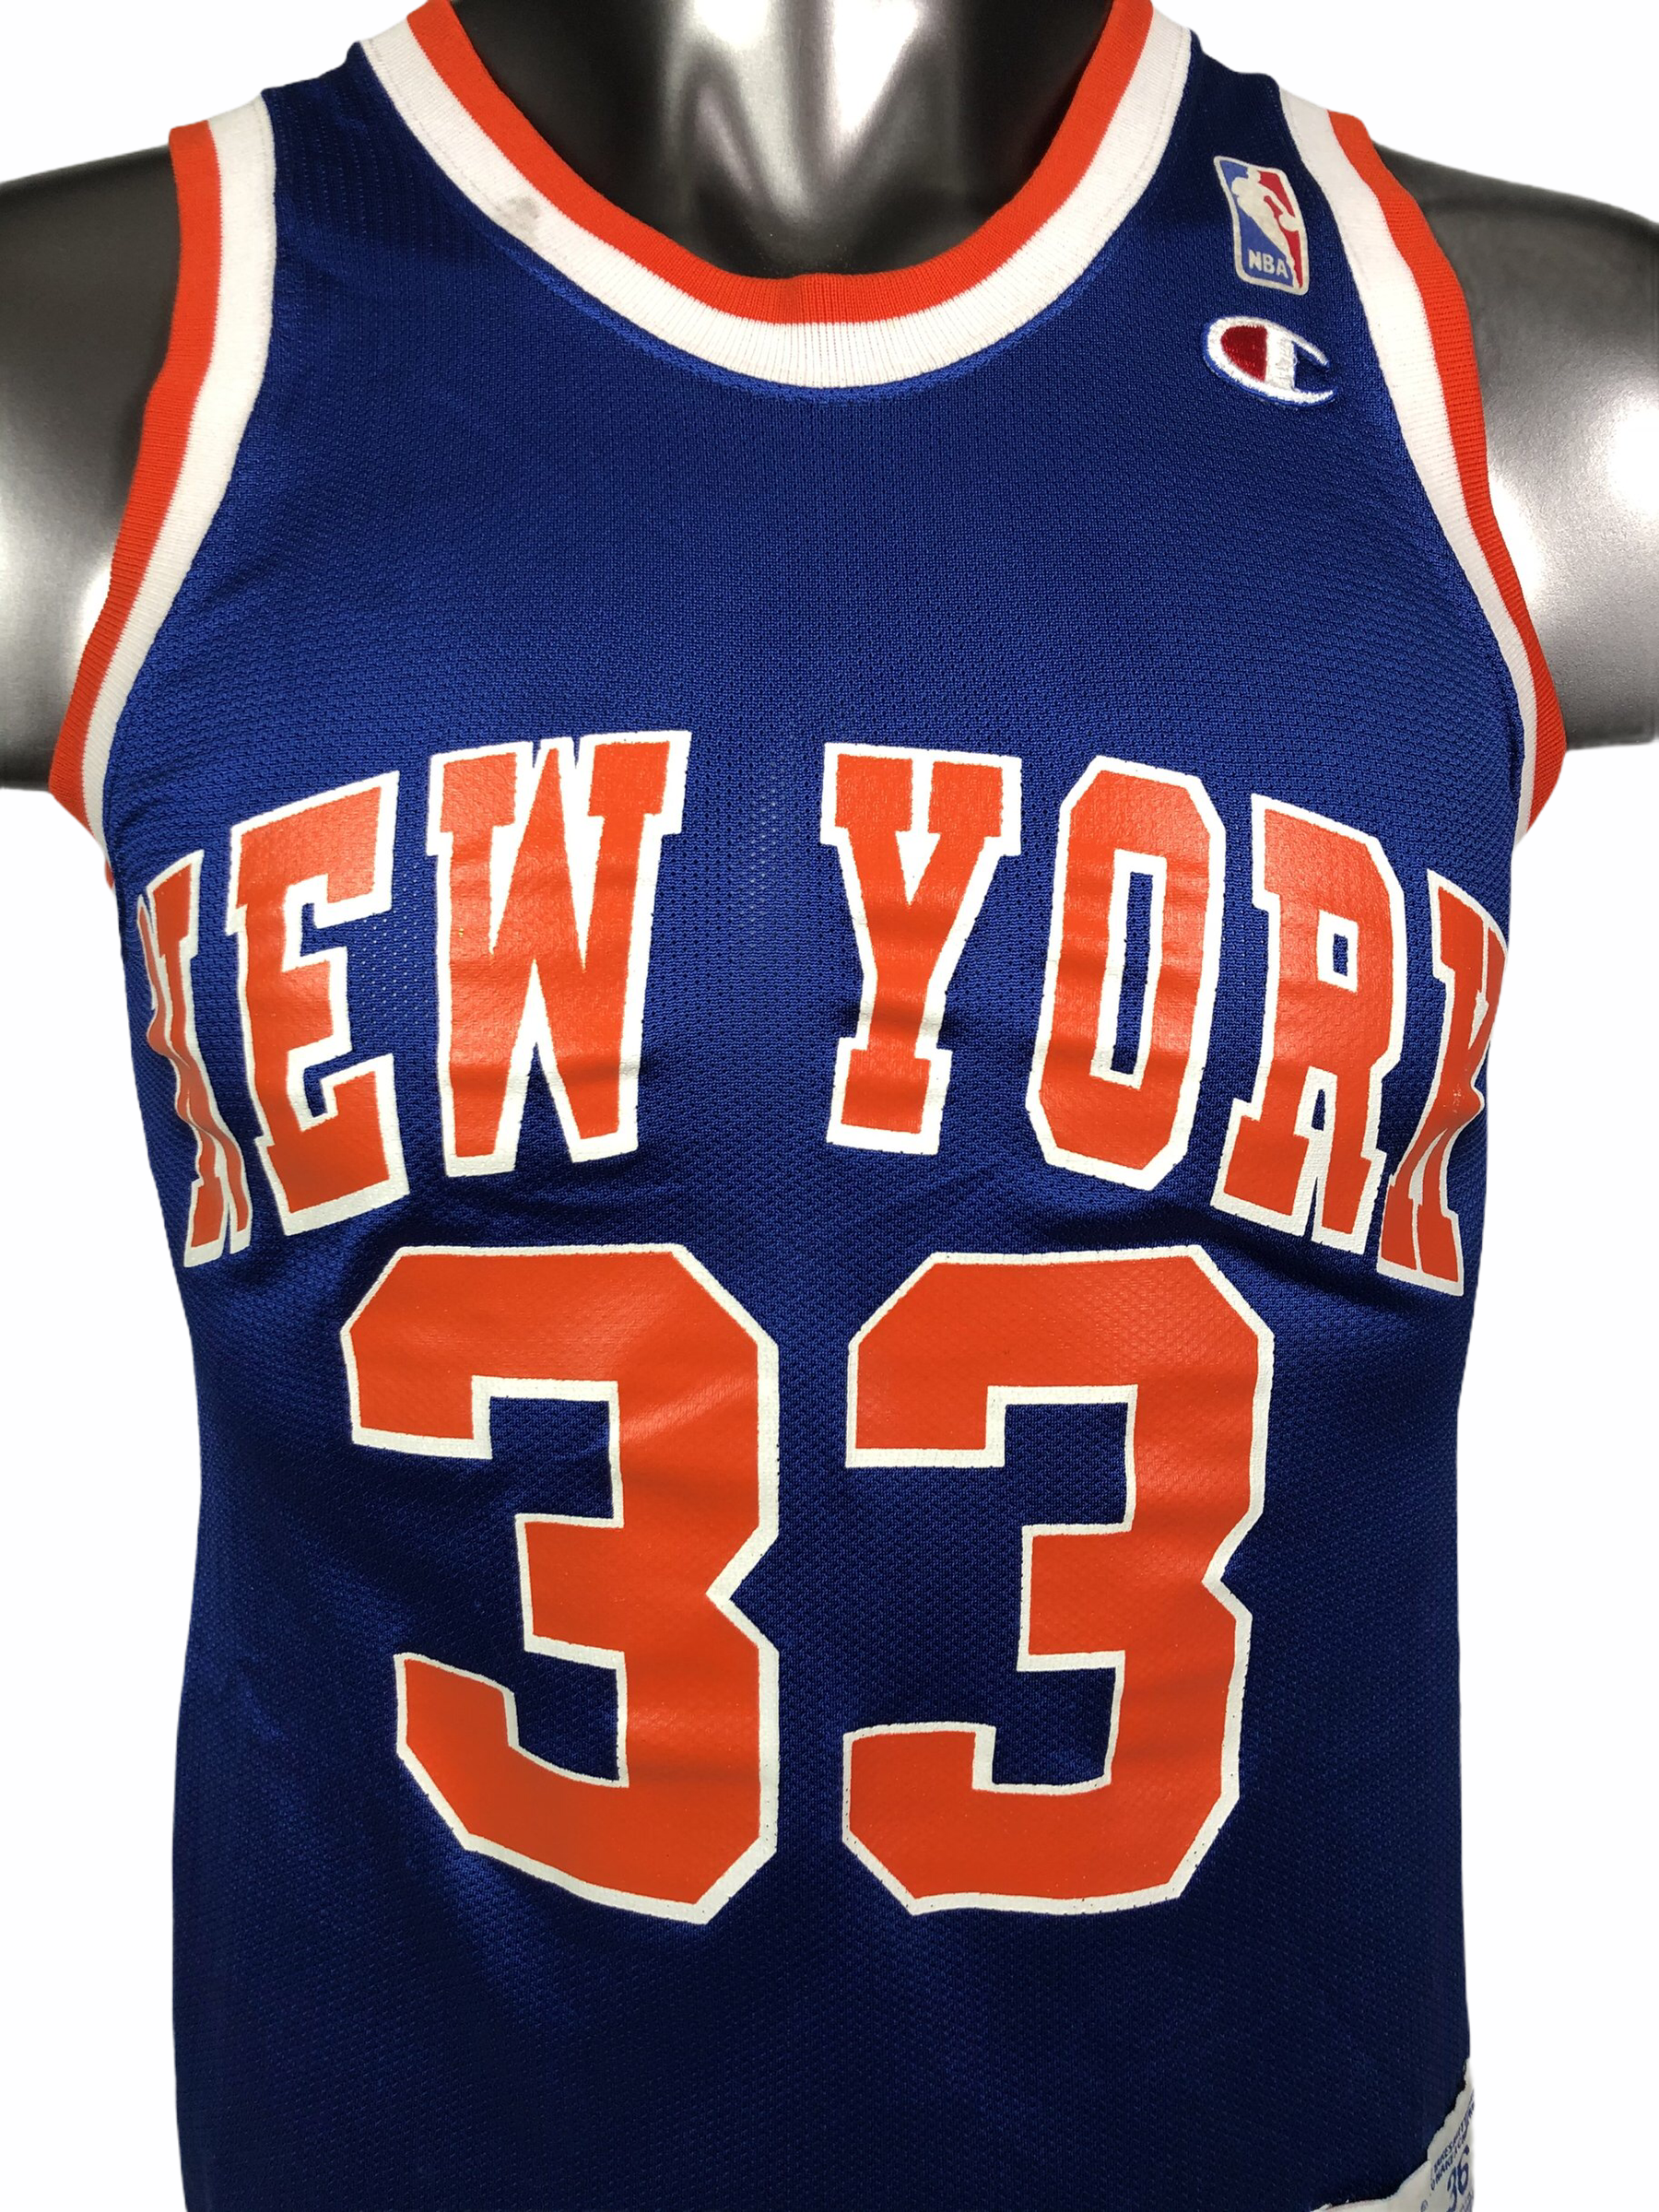 Vintage Mitchell and Ness Patrick Ewing New York Knicks Jersey sz